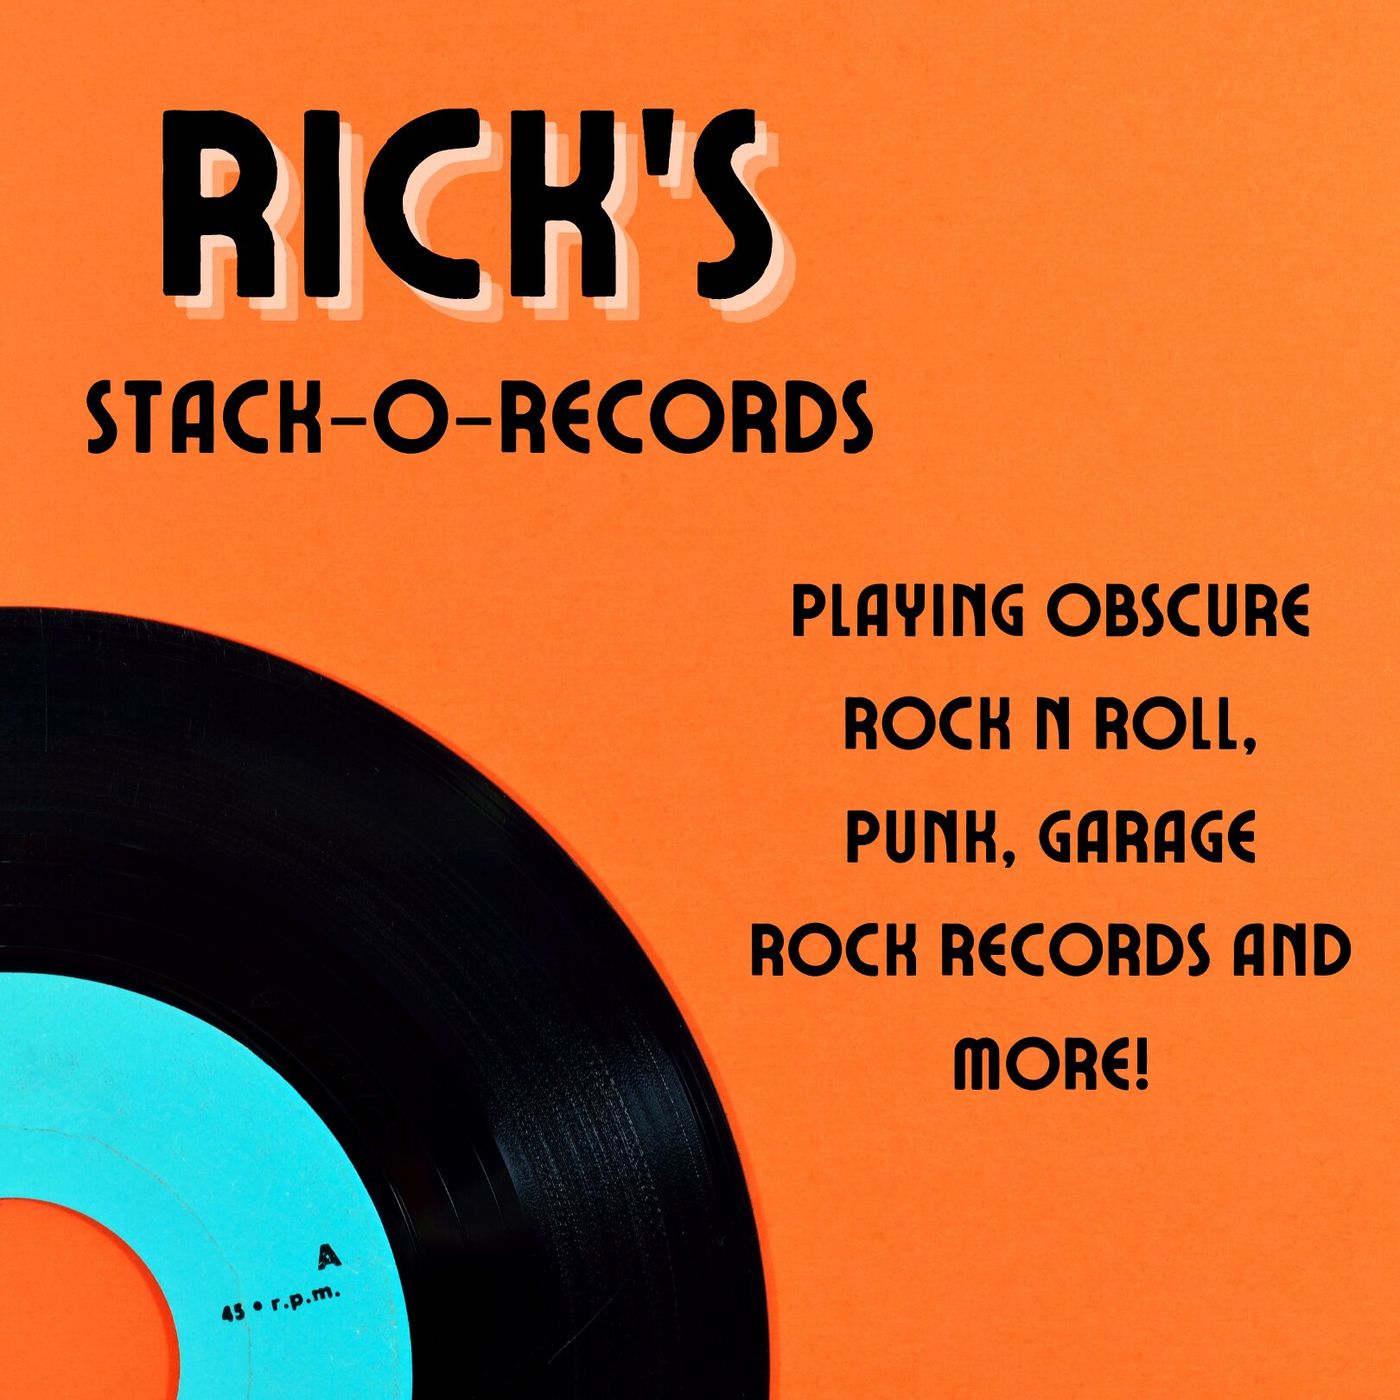 Rick’s Stack-O-Records!